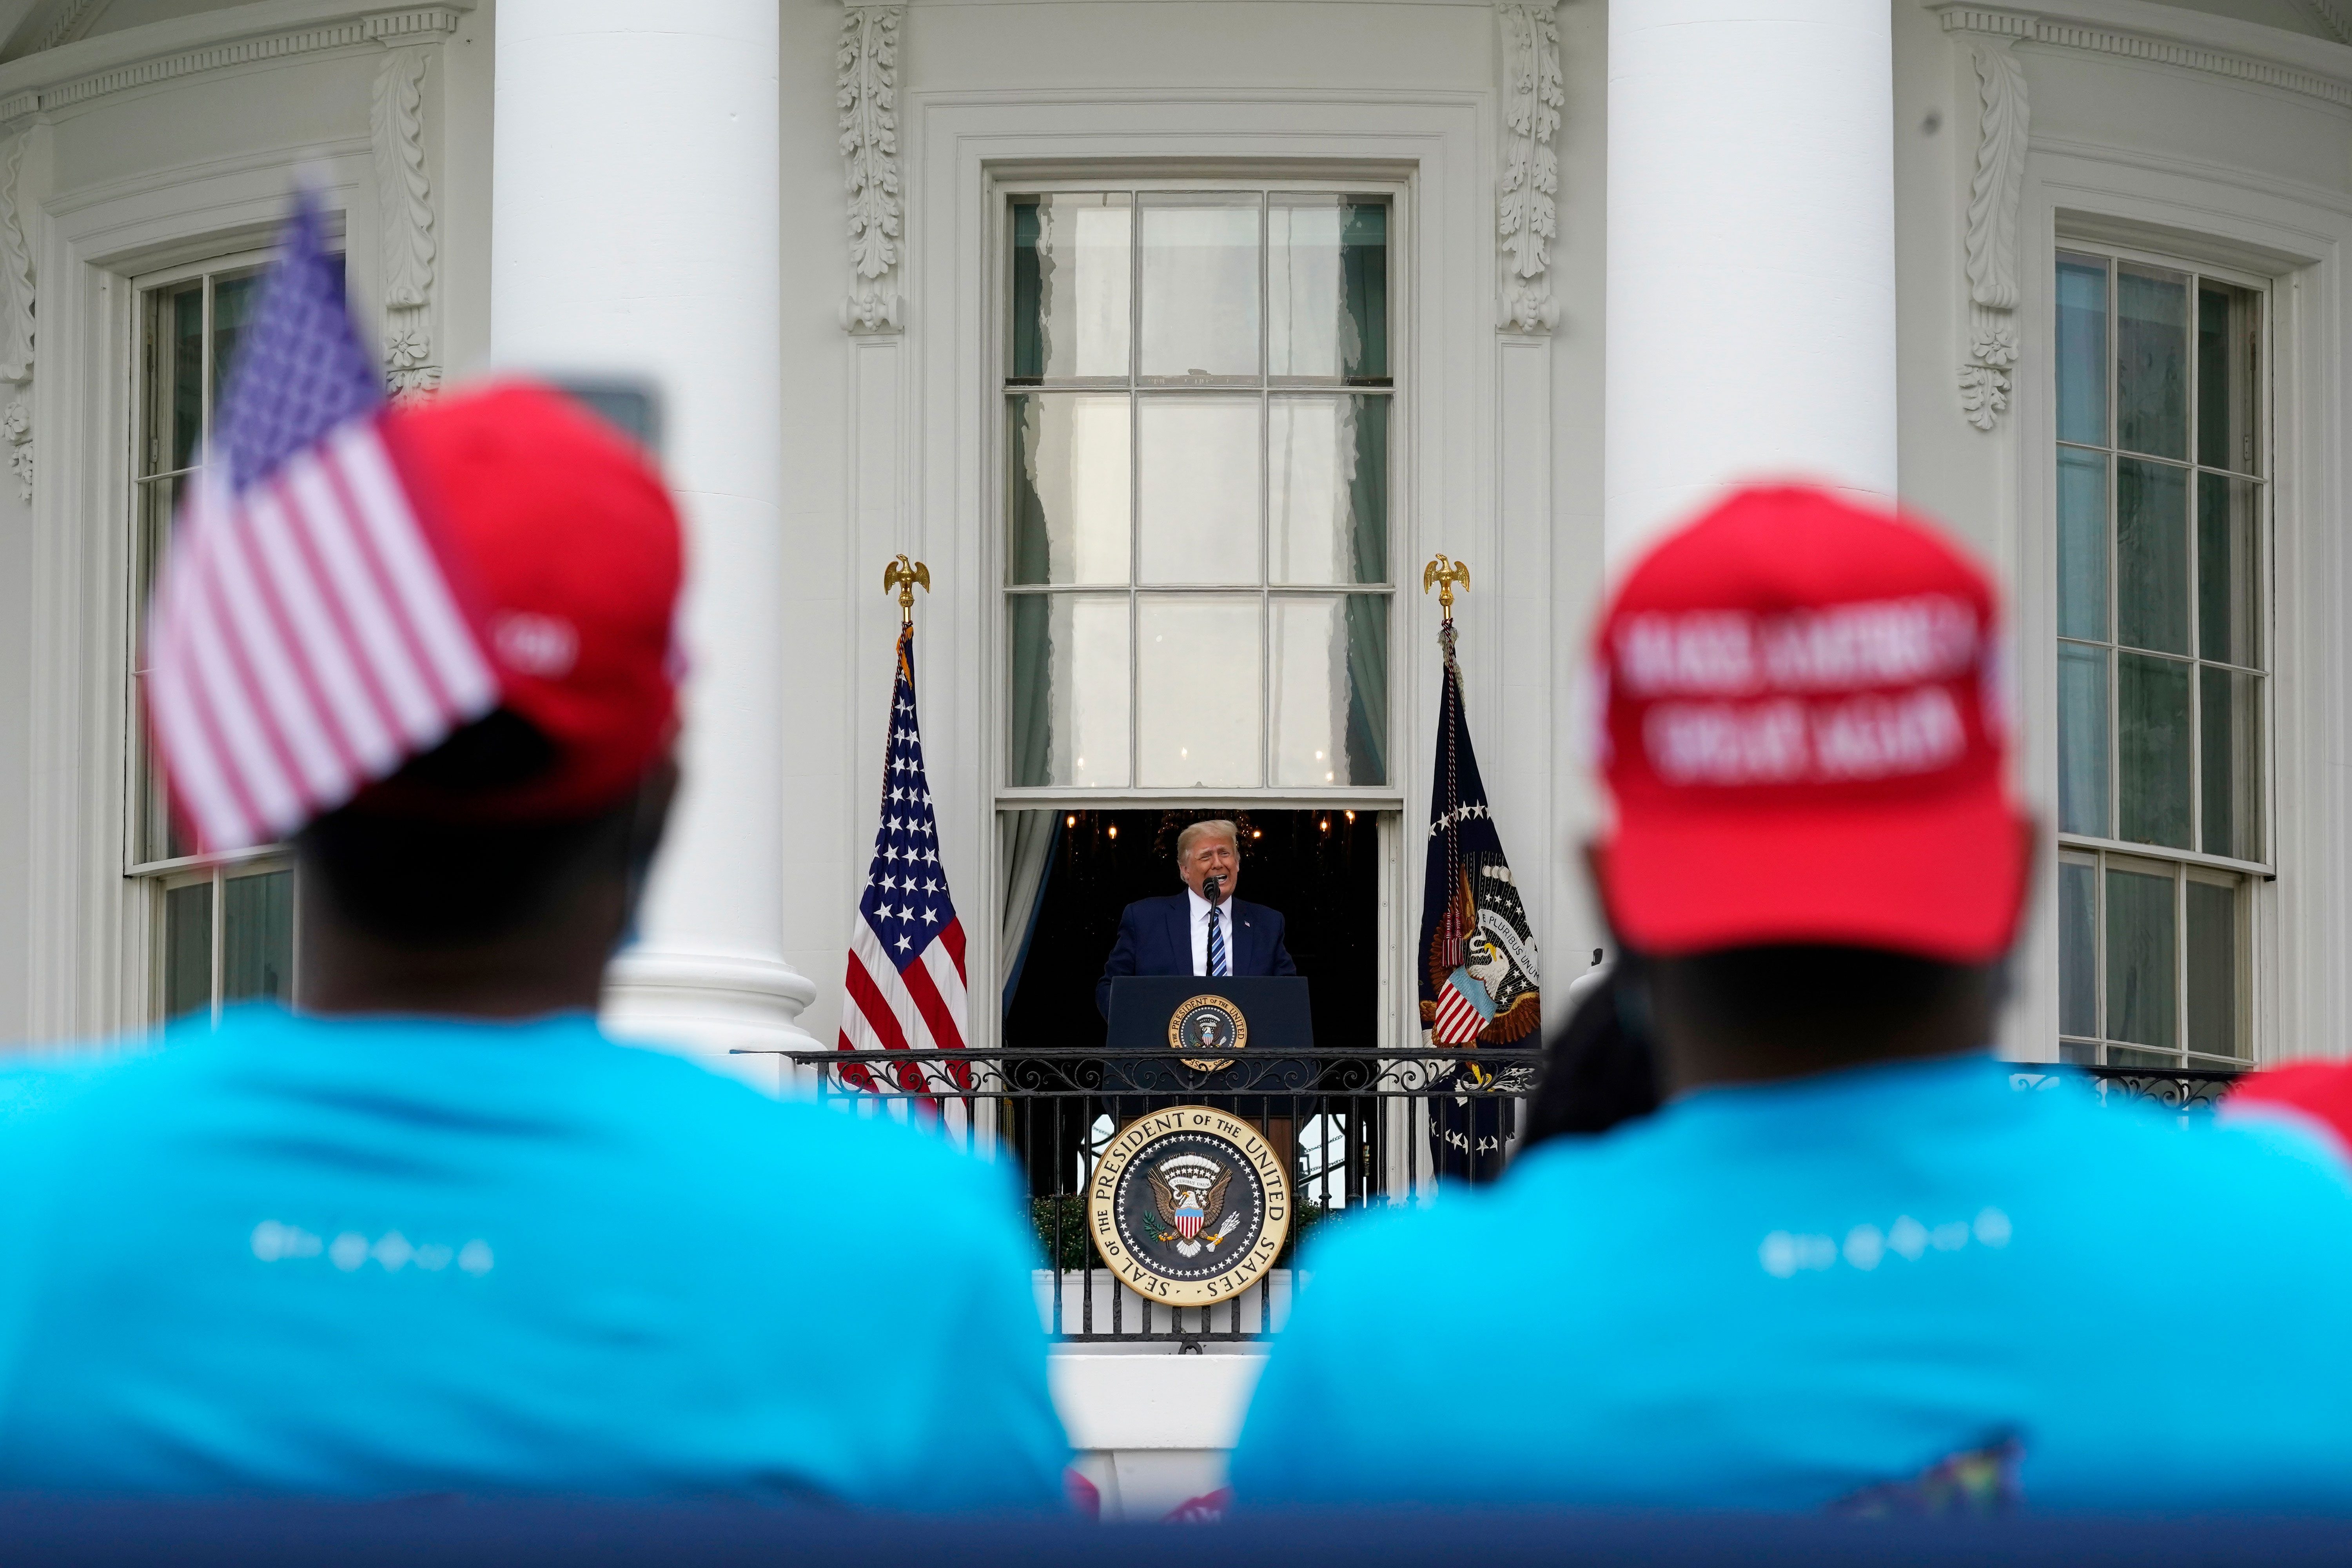 President Trump defends Saturday's White House event